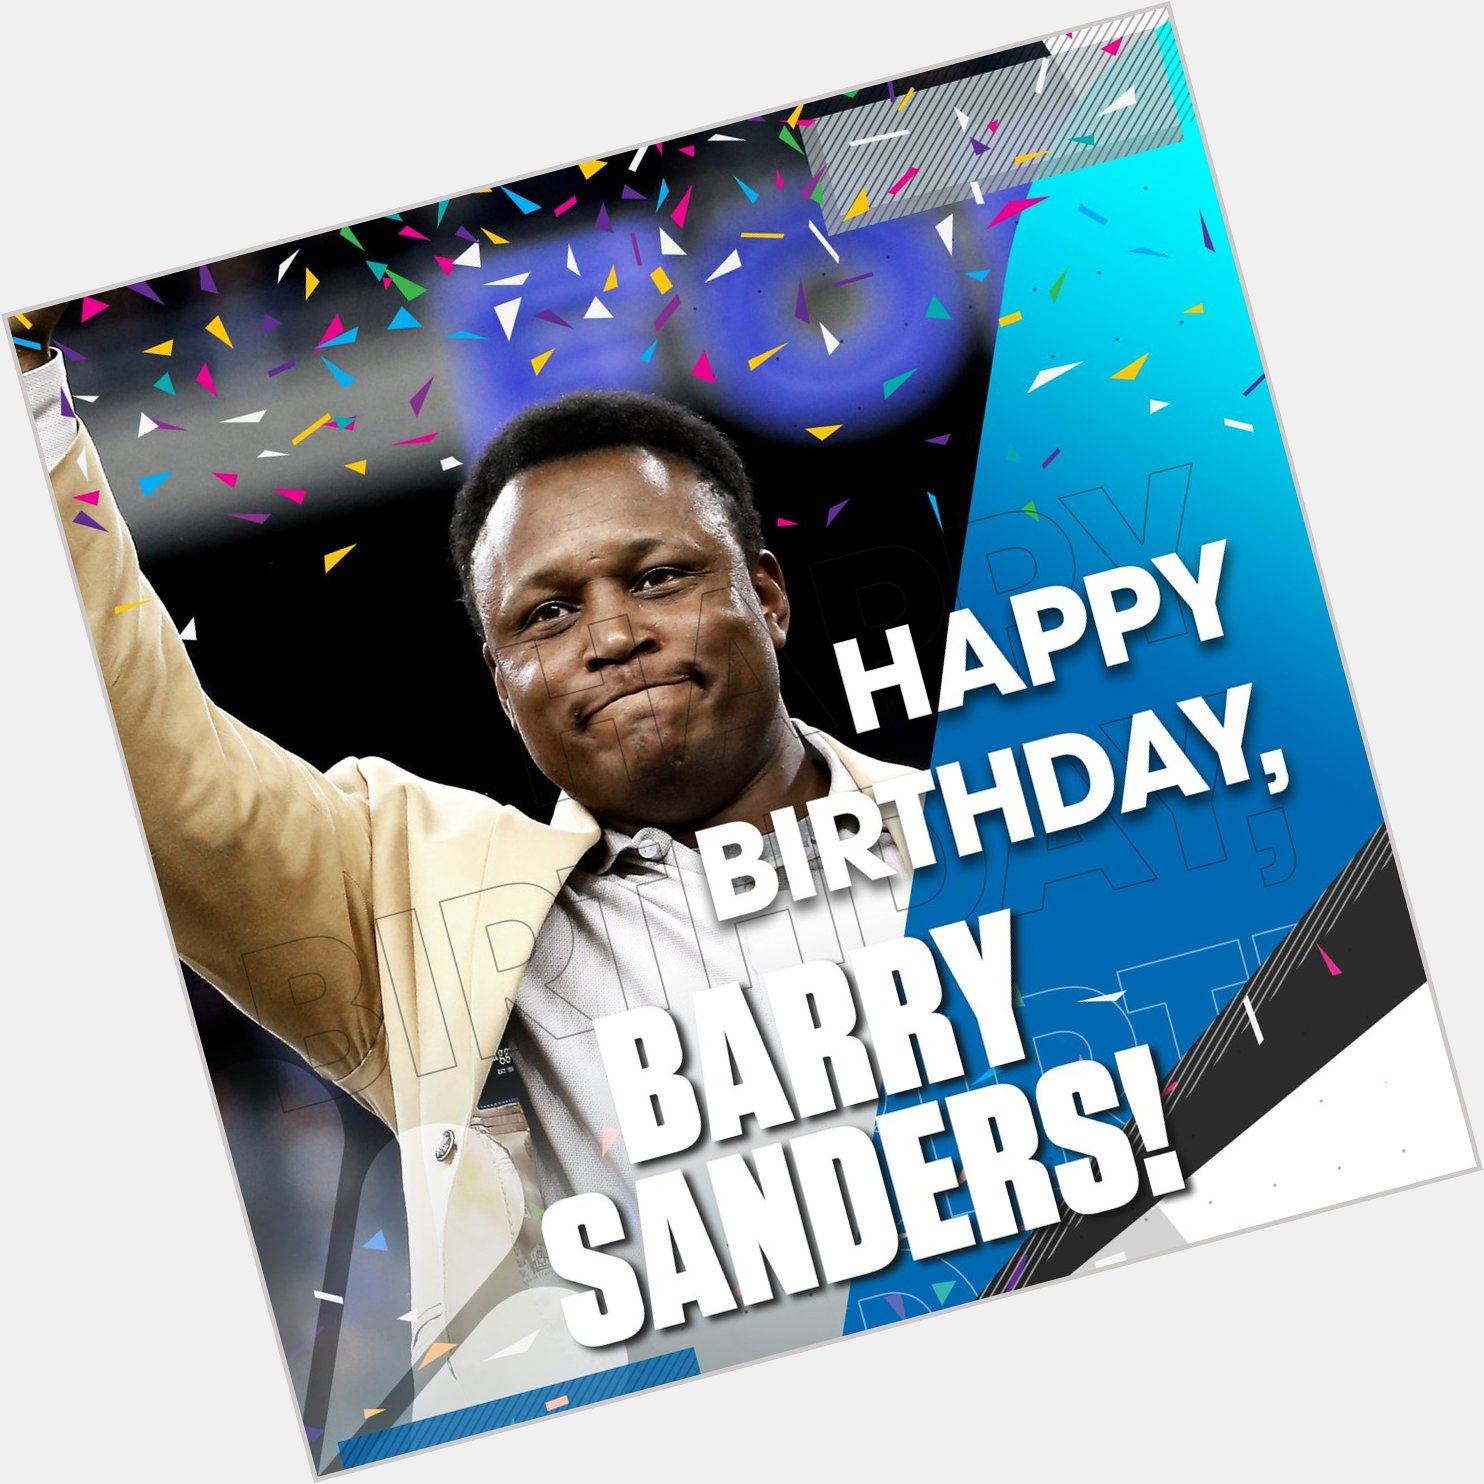 Happy Birthday to the legend, Barry Sanders! 